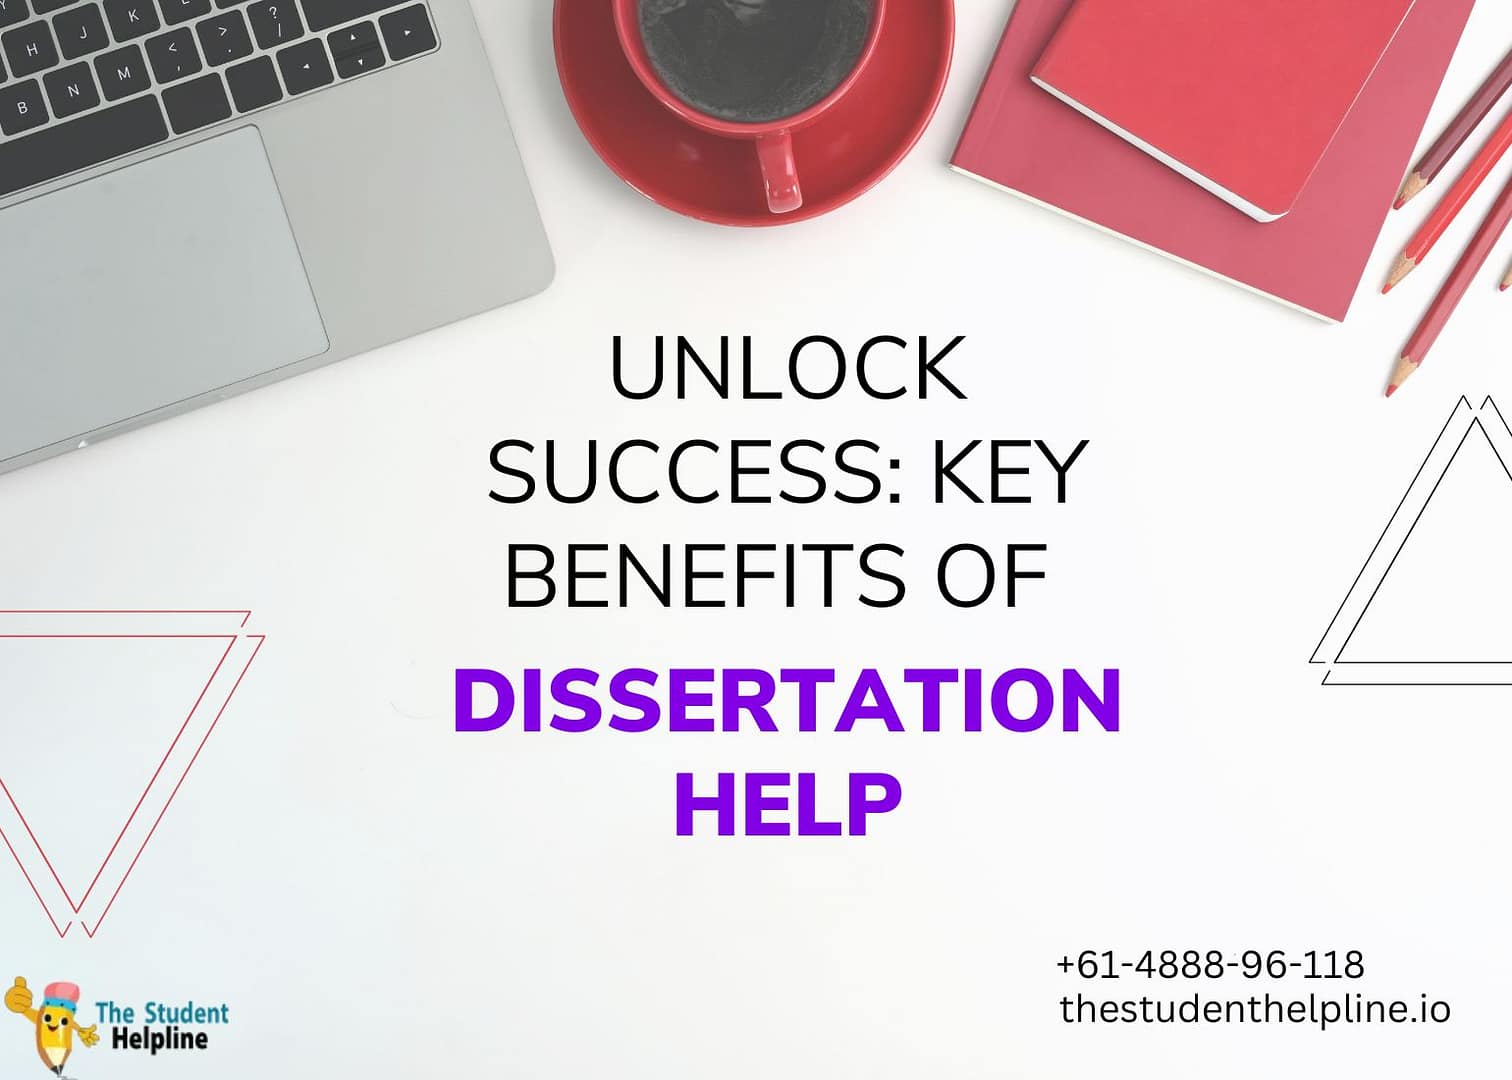 Unlock Success: Key Benefits of Dissertation Help